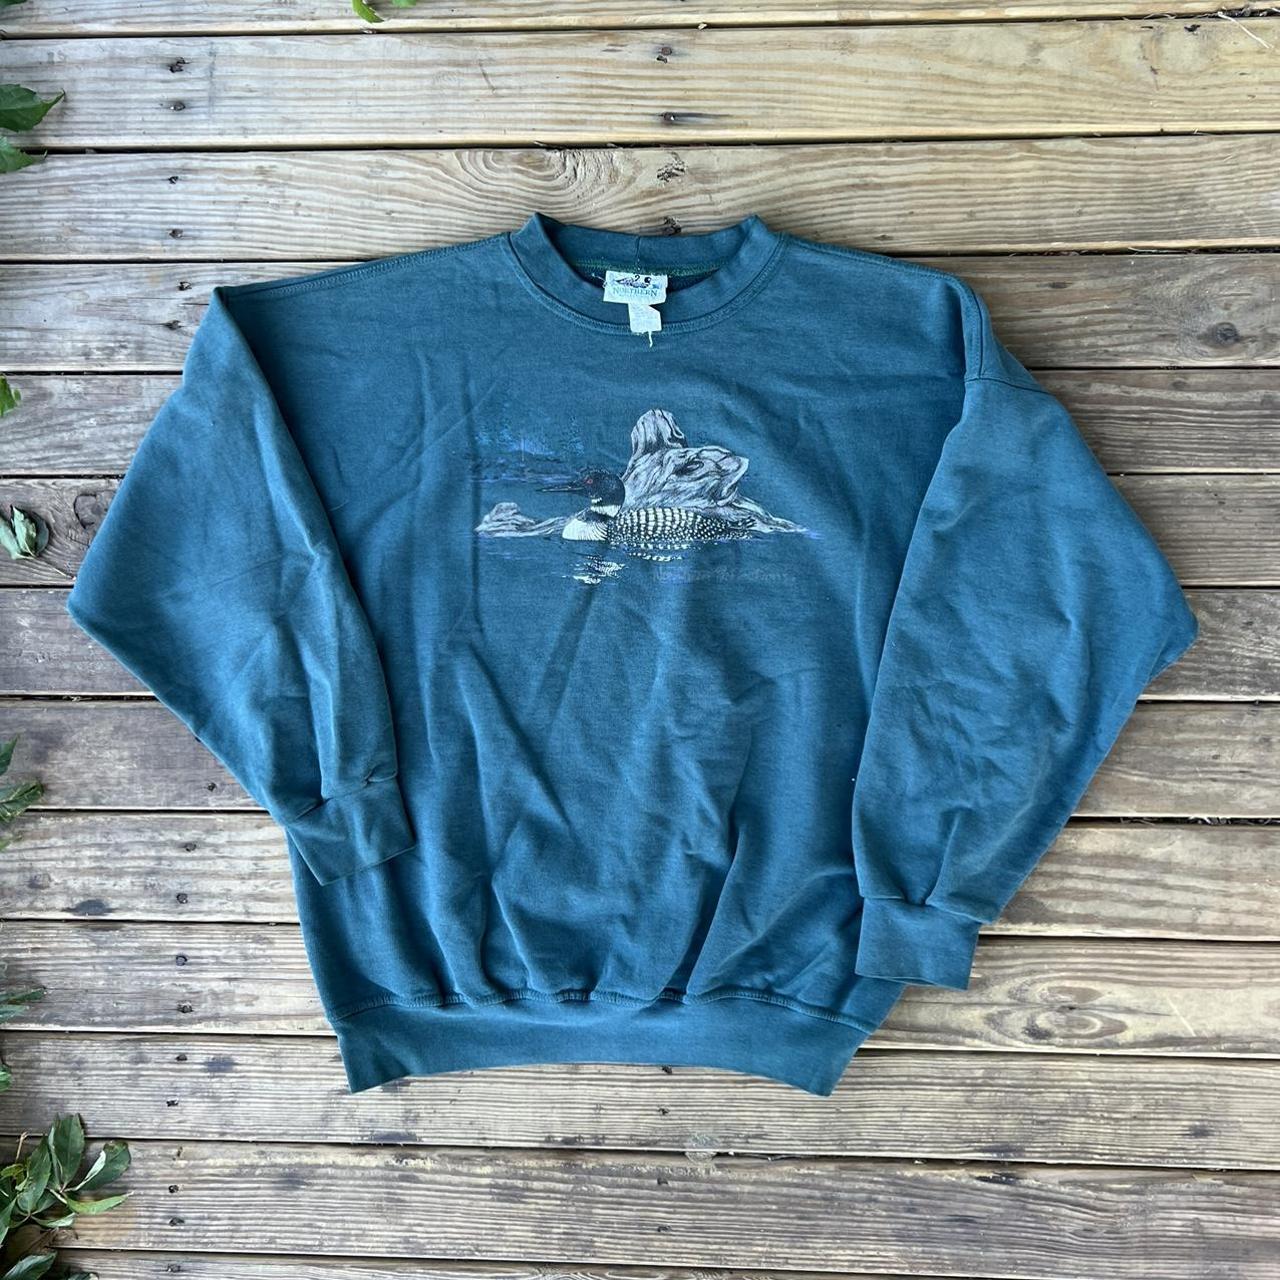 Vintage Northern Reflections Sweatshirt Made in... - Depop